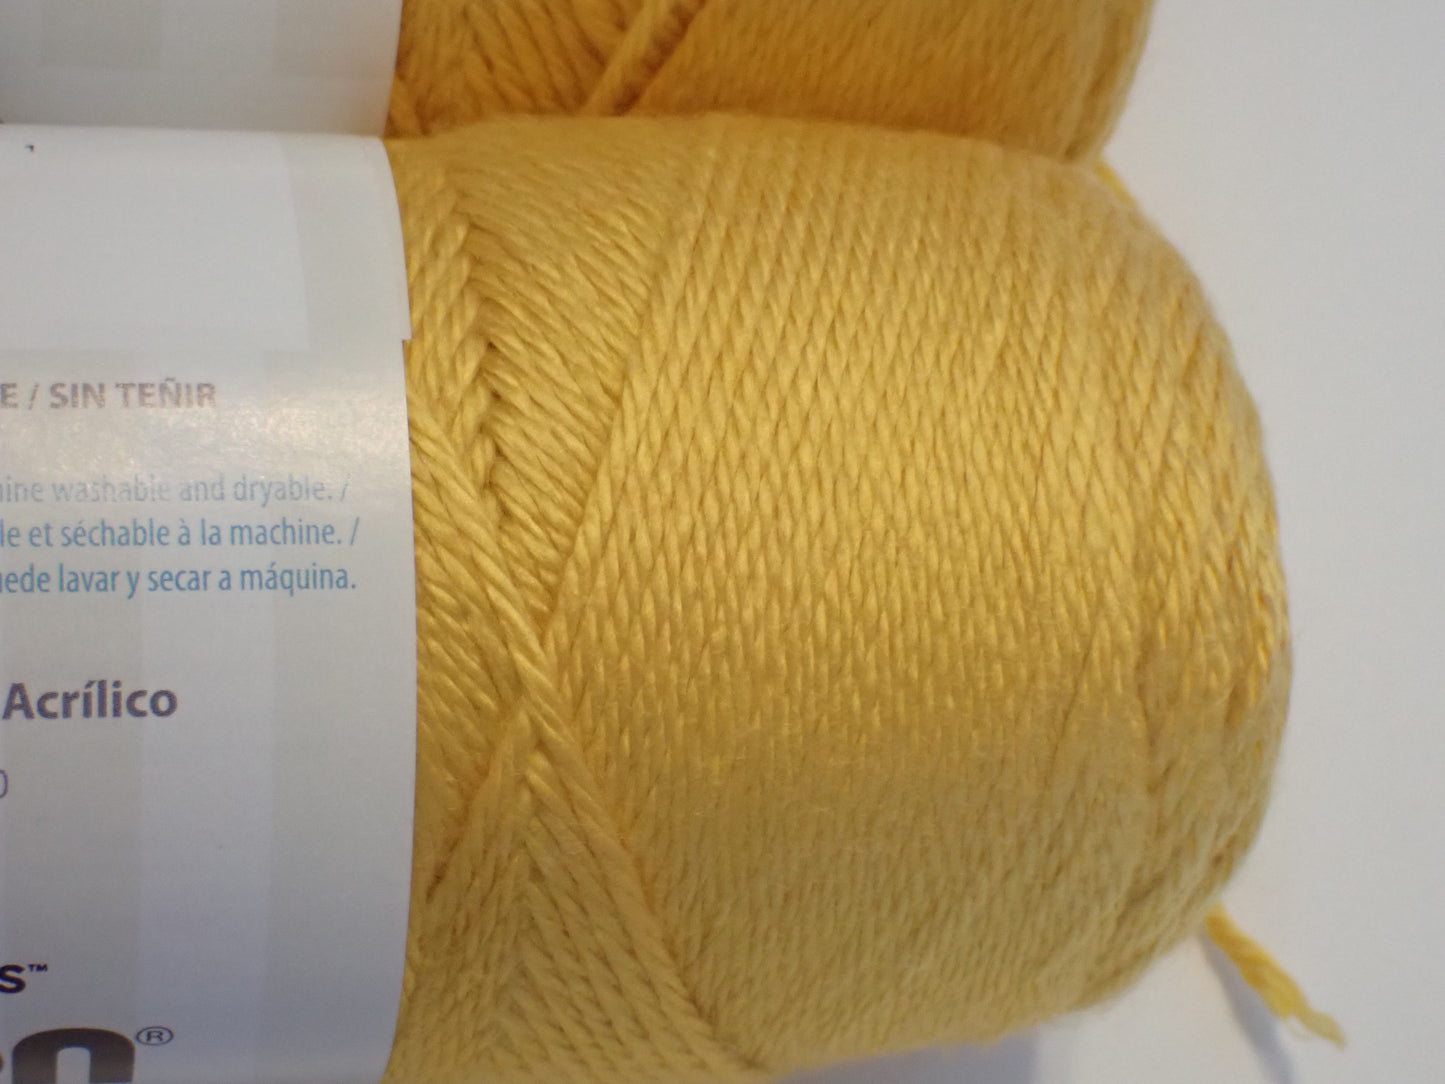 Caron Simply Soft DK weight yarn Burgundy – Sweetwater Yarns